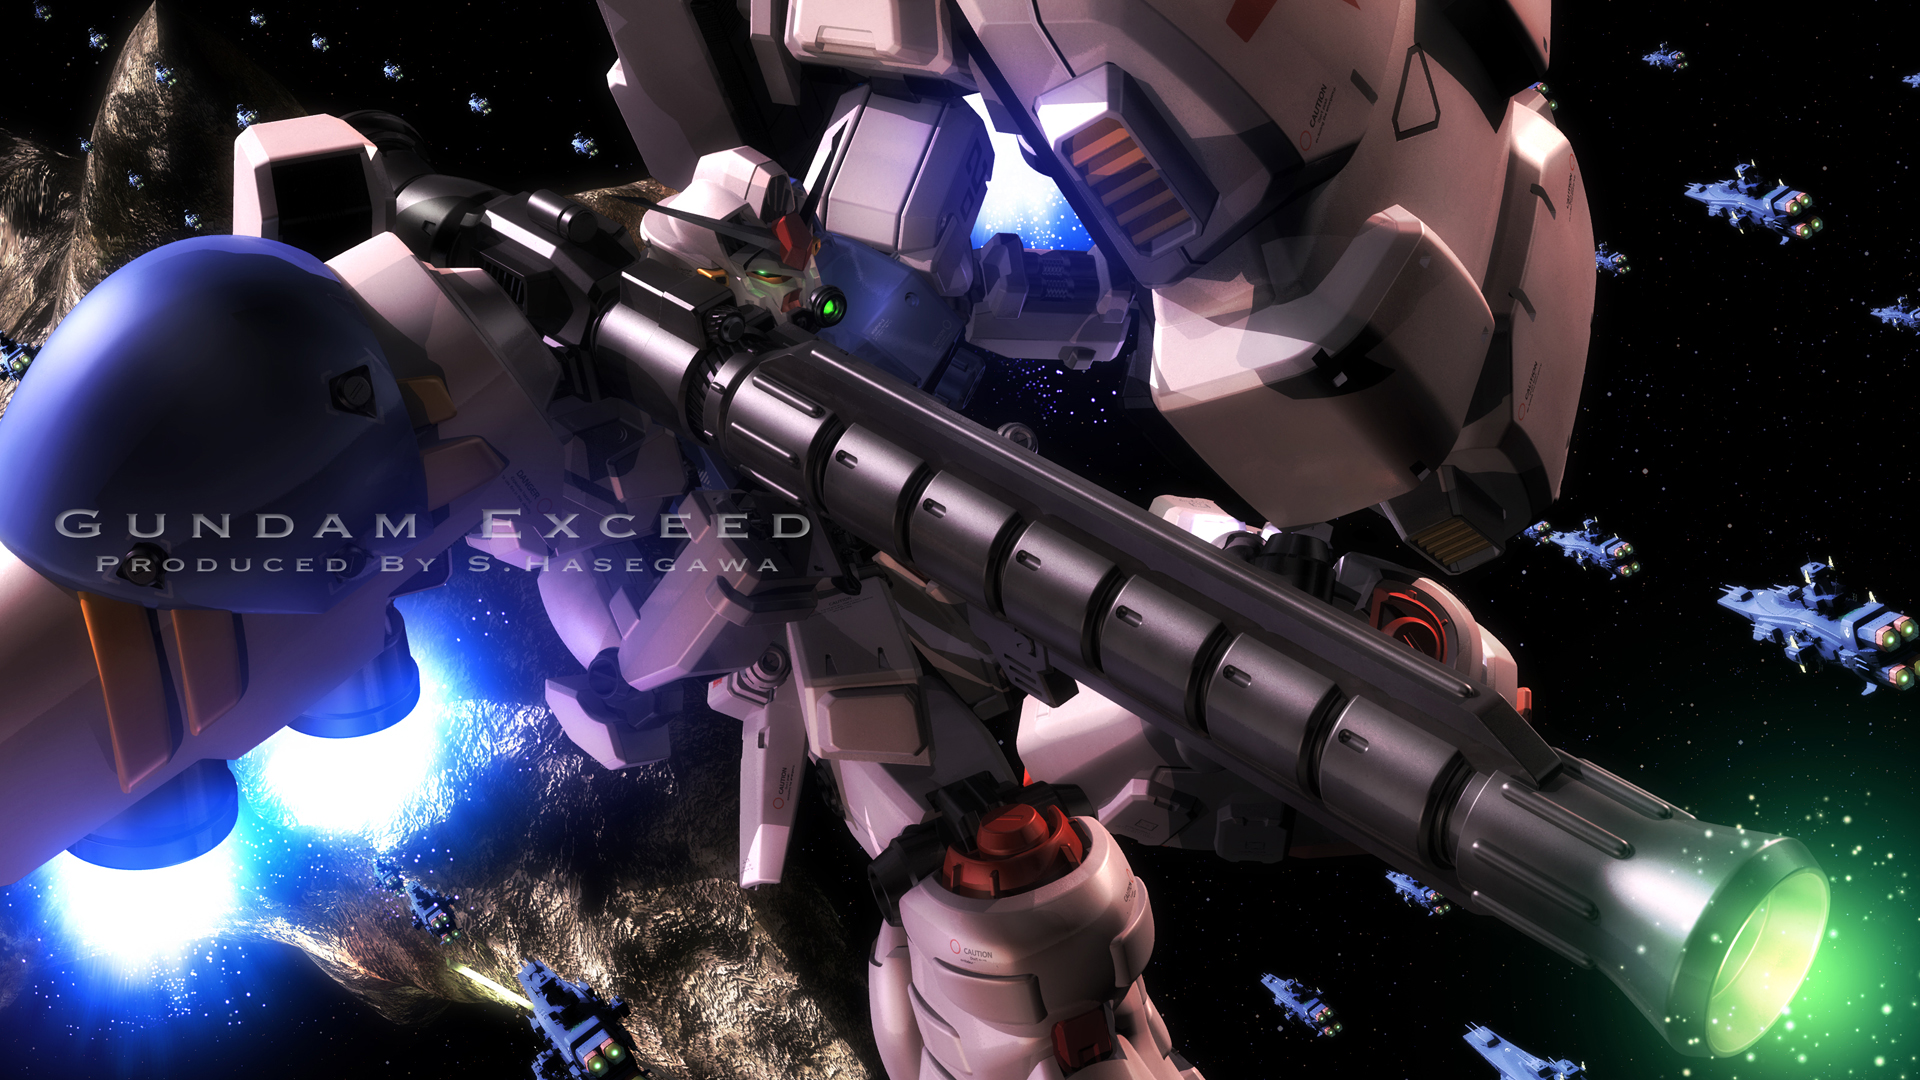 RX-78GP02A Gundam "Physalis"